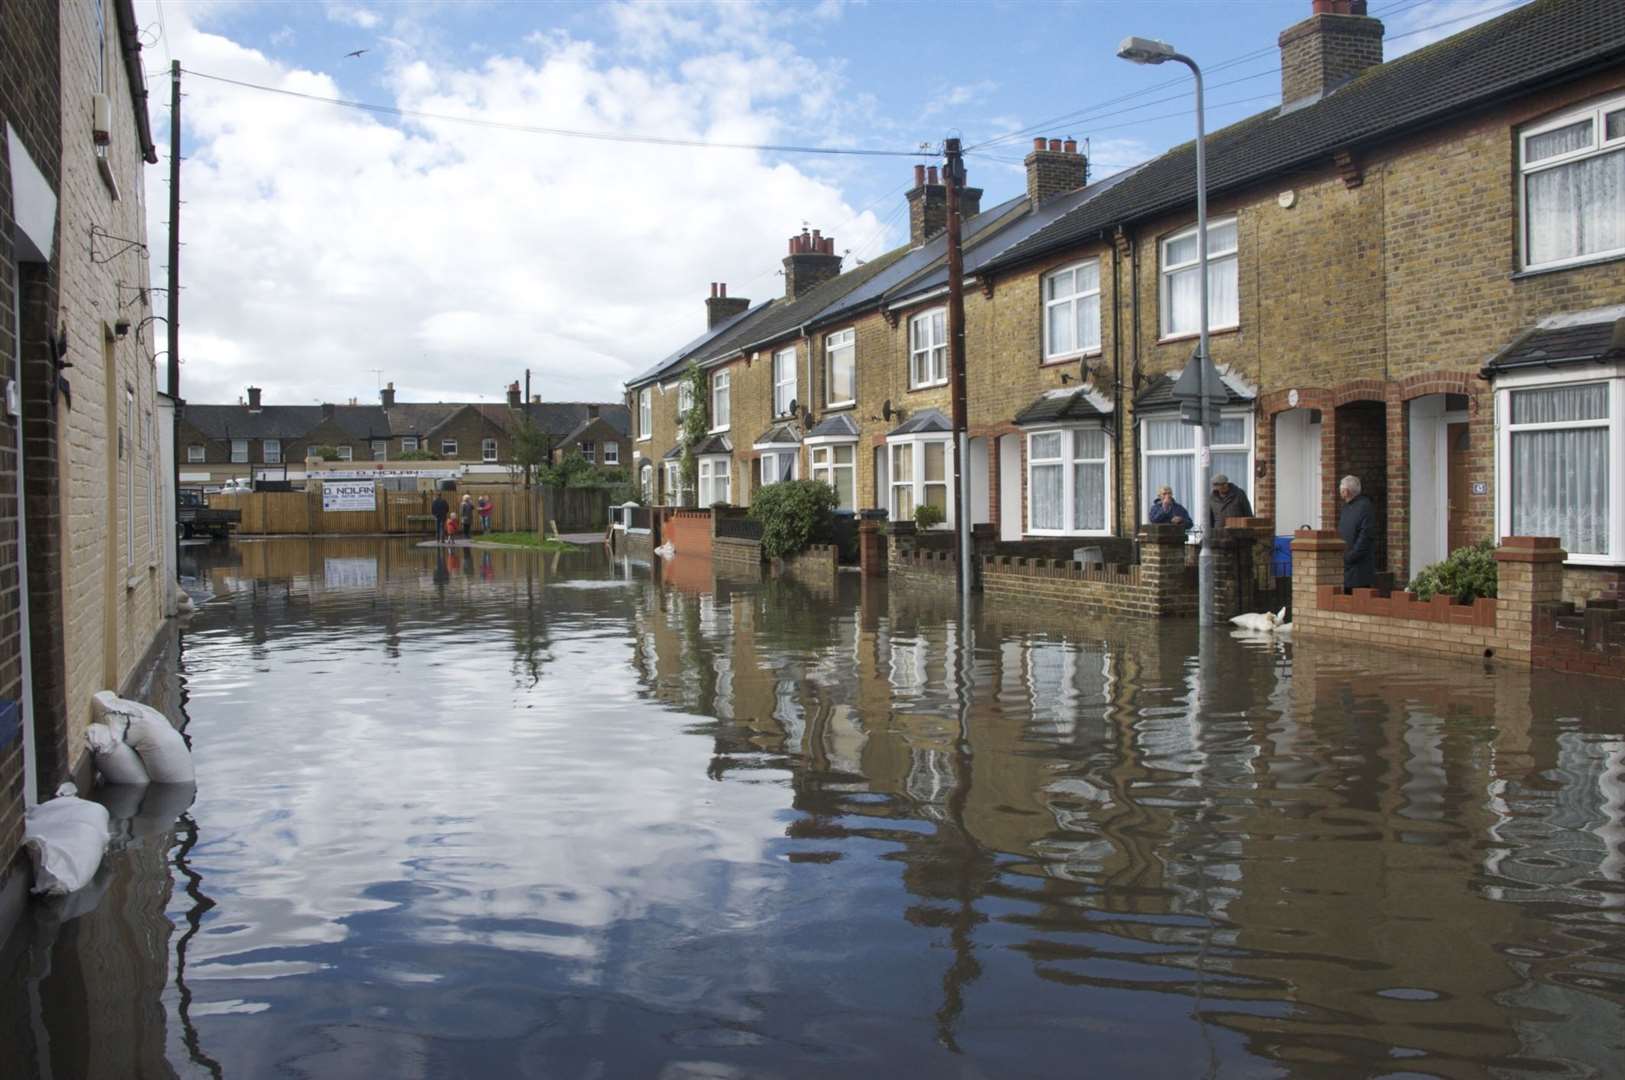 Albert Road flooding in 2015